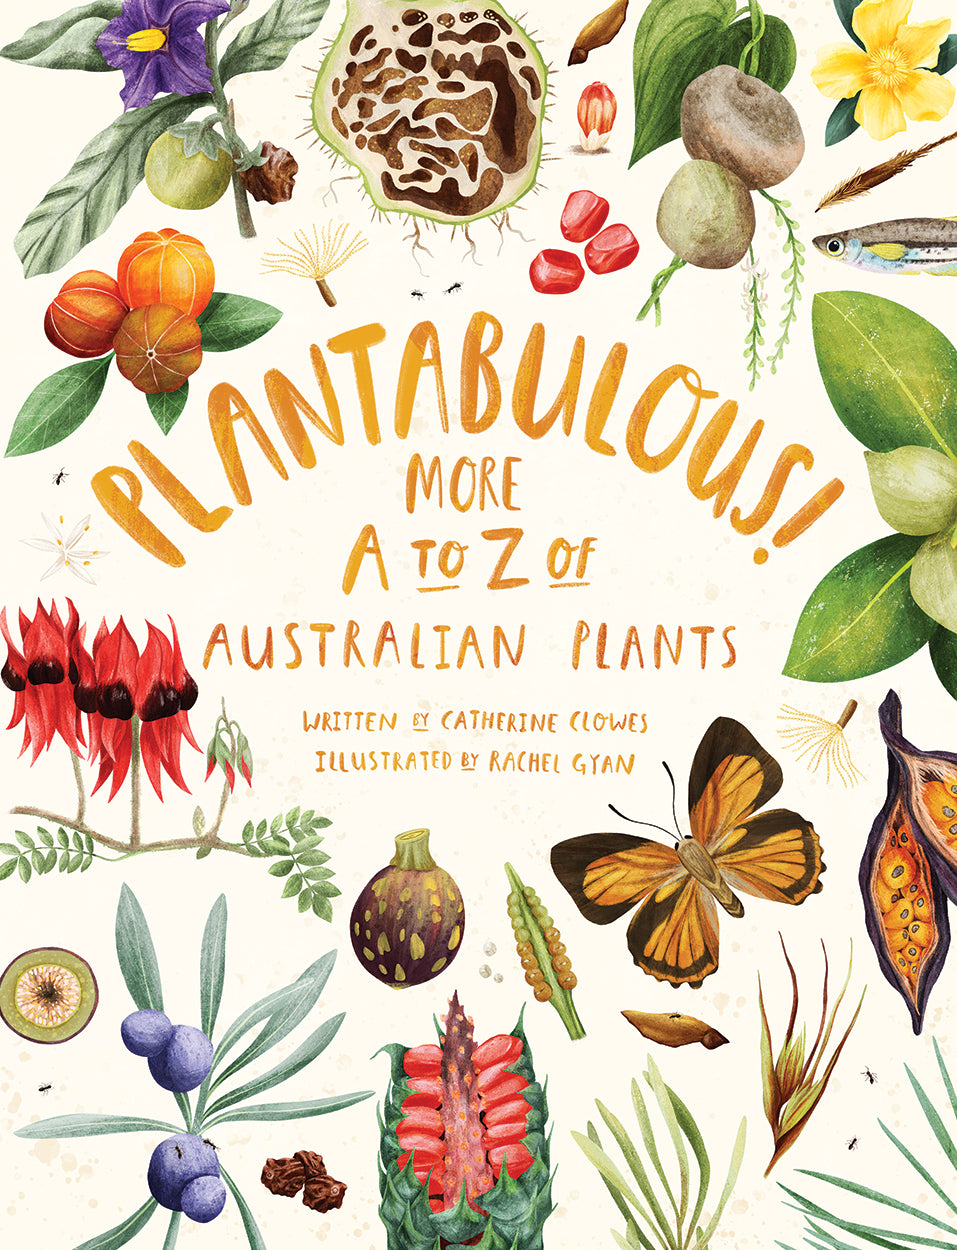 Plantabulous! More A to Z of Australian Plants